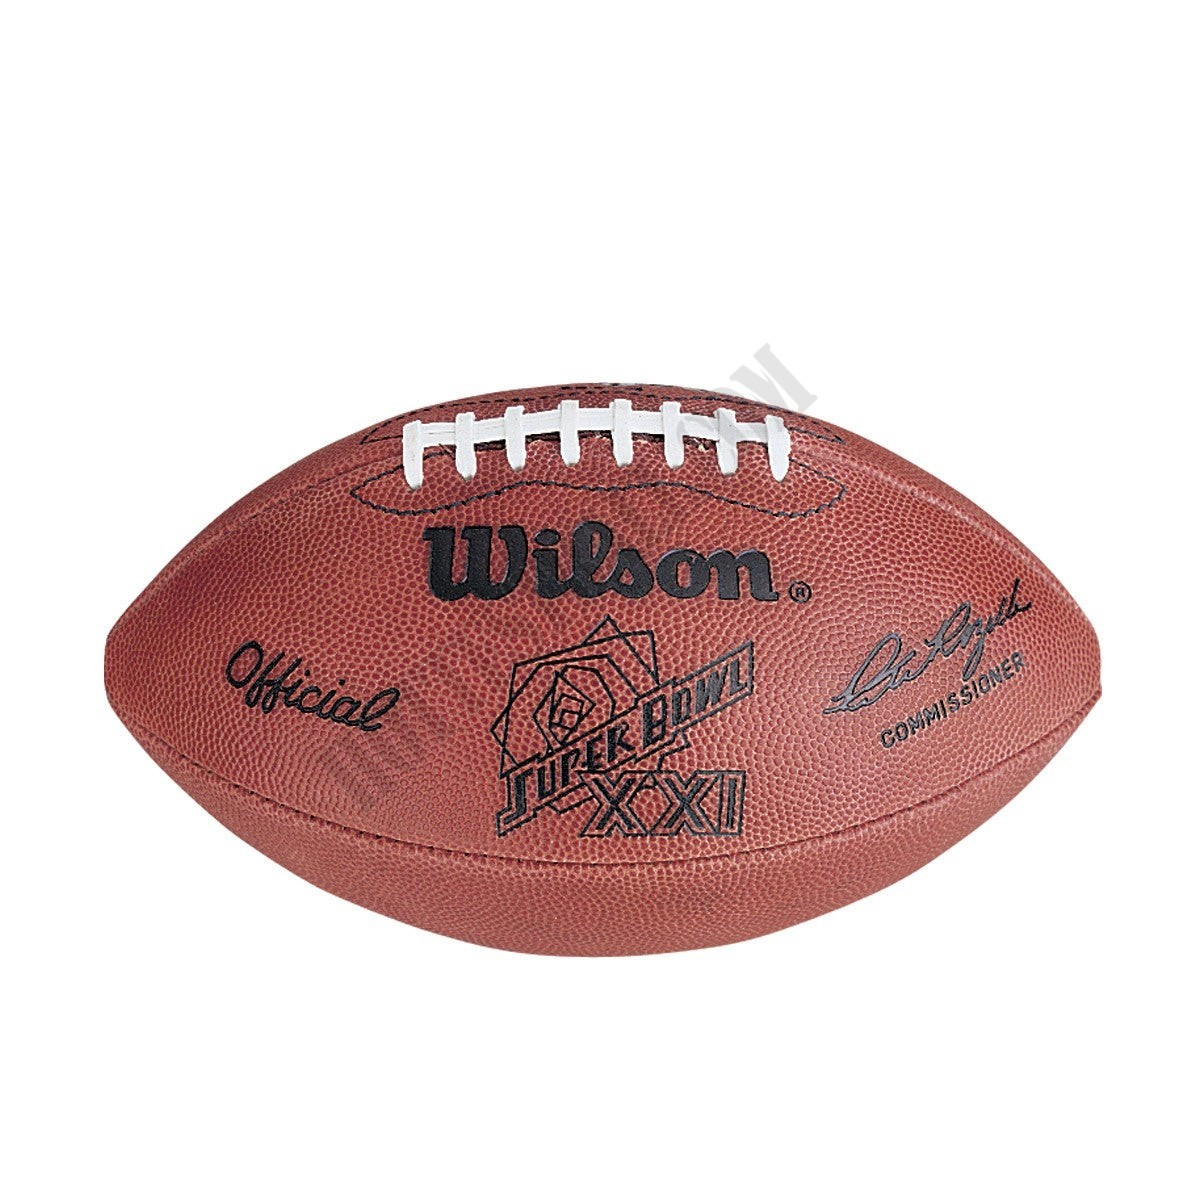 Super Bowl XXI Game Football - New York Giants ● Wilson Promotions - Super Bowl XXI Game Football - New York Giants ● Wilson Promotions